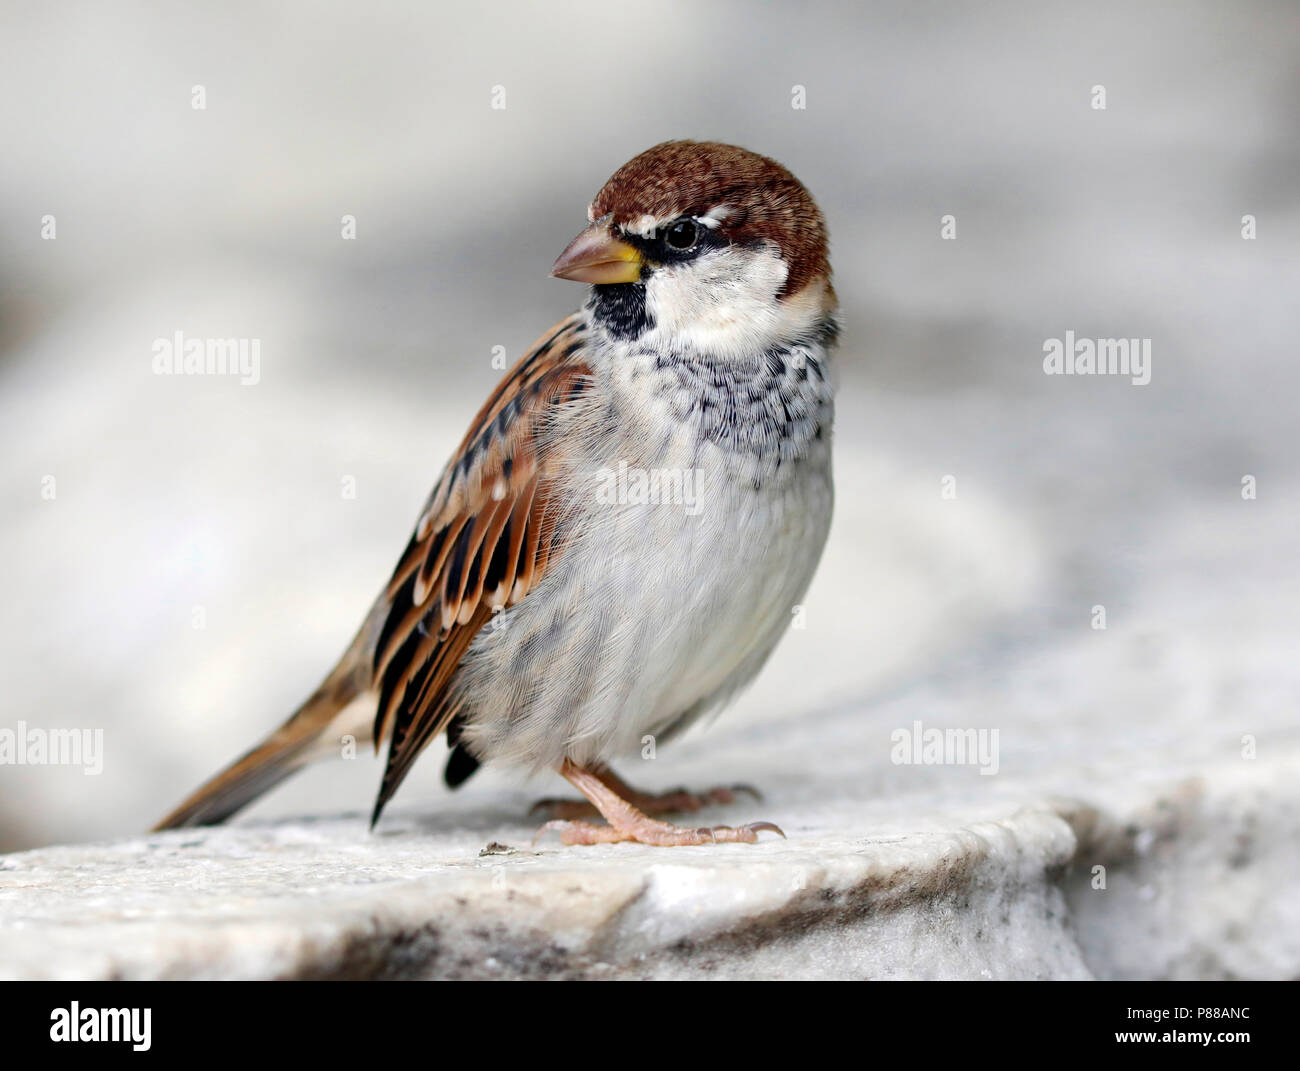 Italiaanse mus; Italiano sparrow; Foto Stock